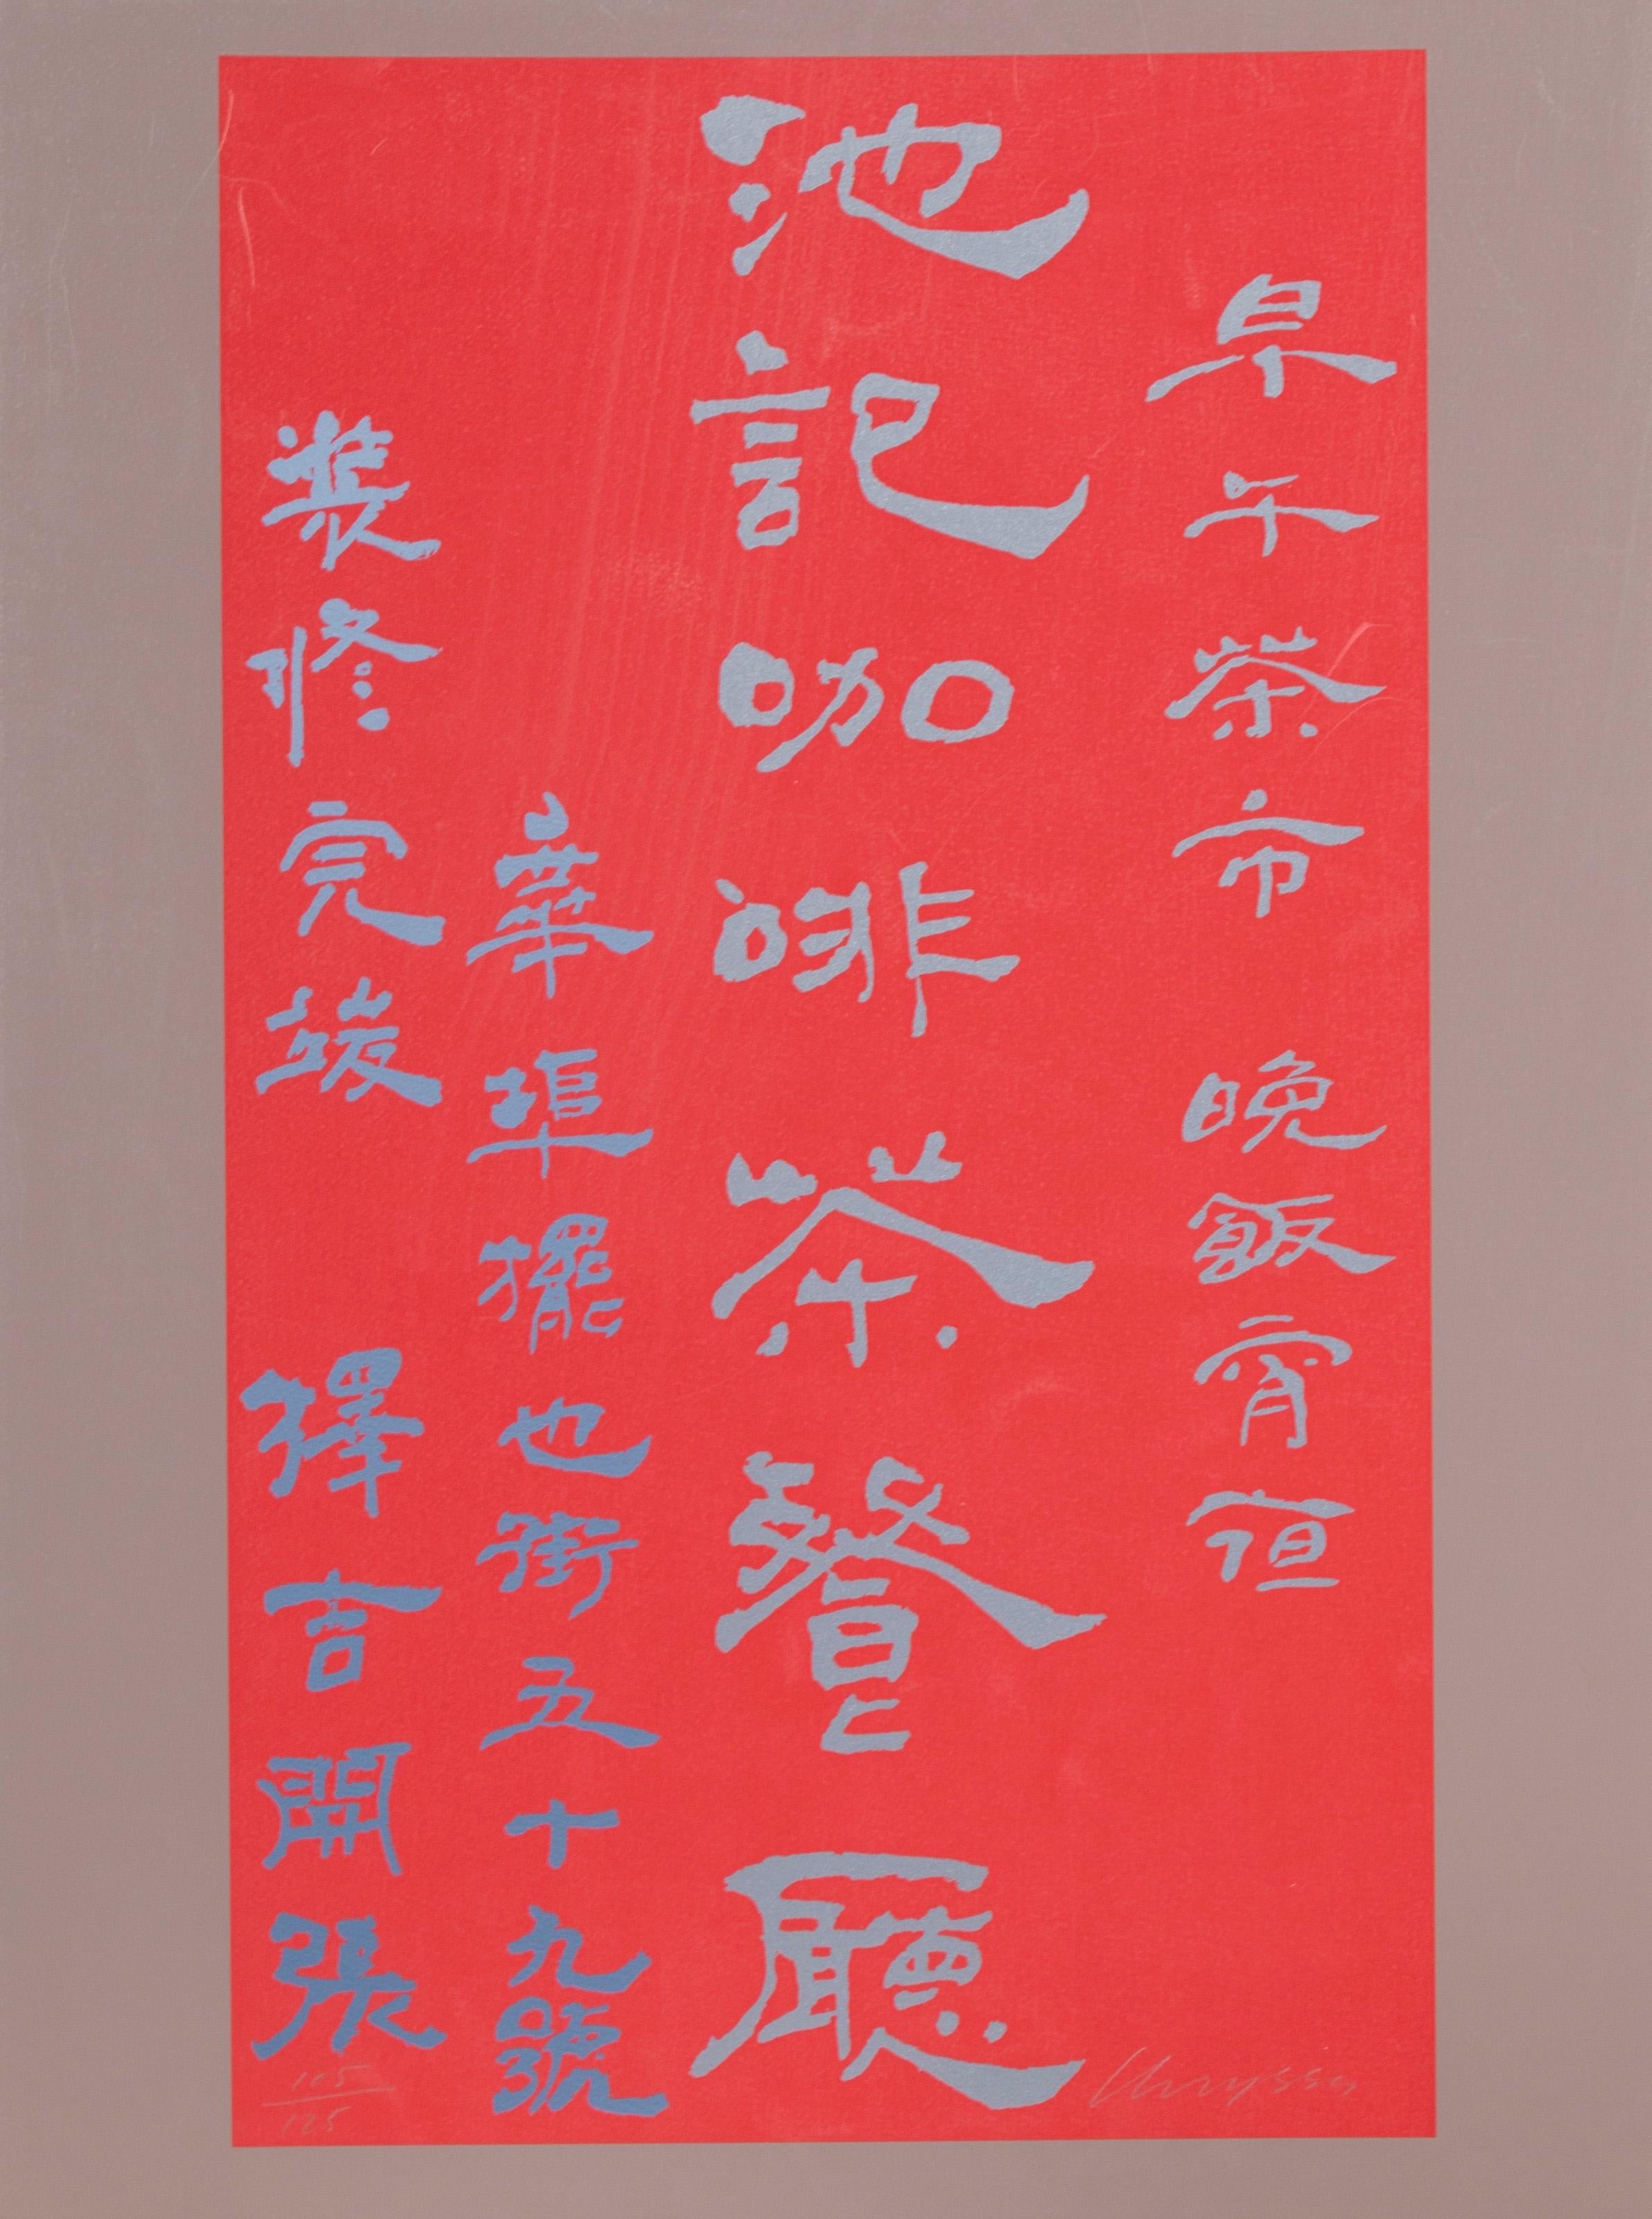 Chryssa Vardea-Mavromichali Abstract Print - Untitled - Chinese Characters - Conceptual Art Screenprint by Chryssa